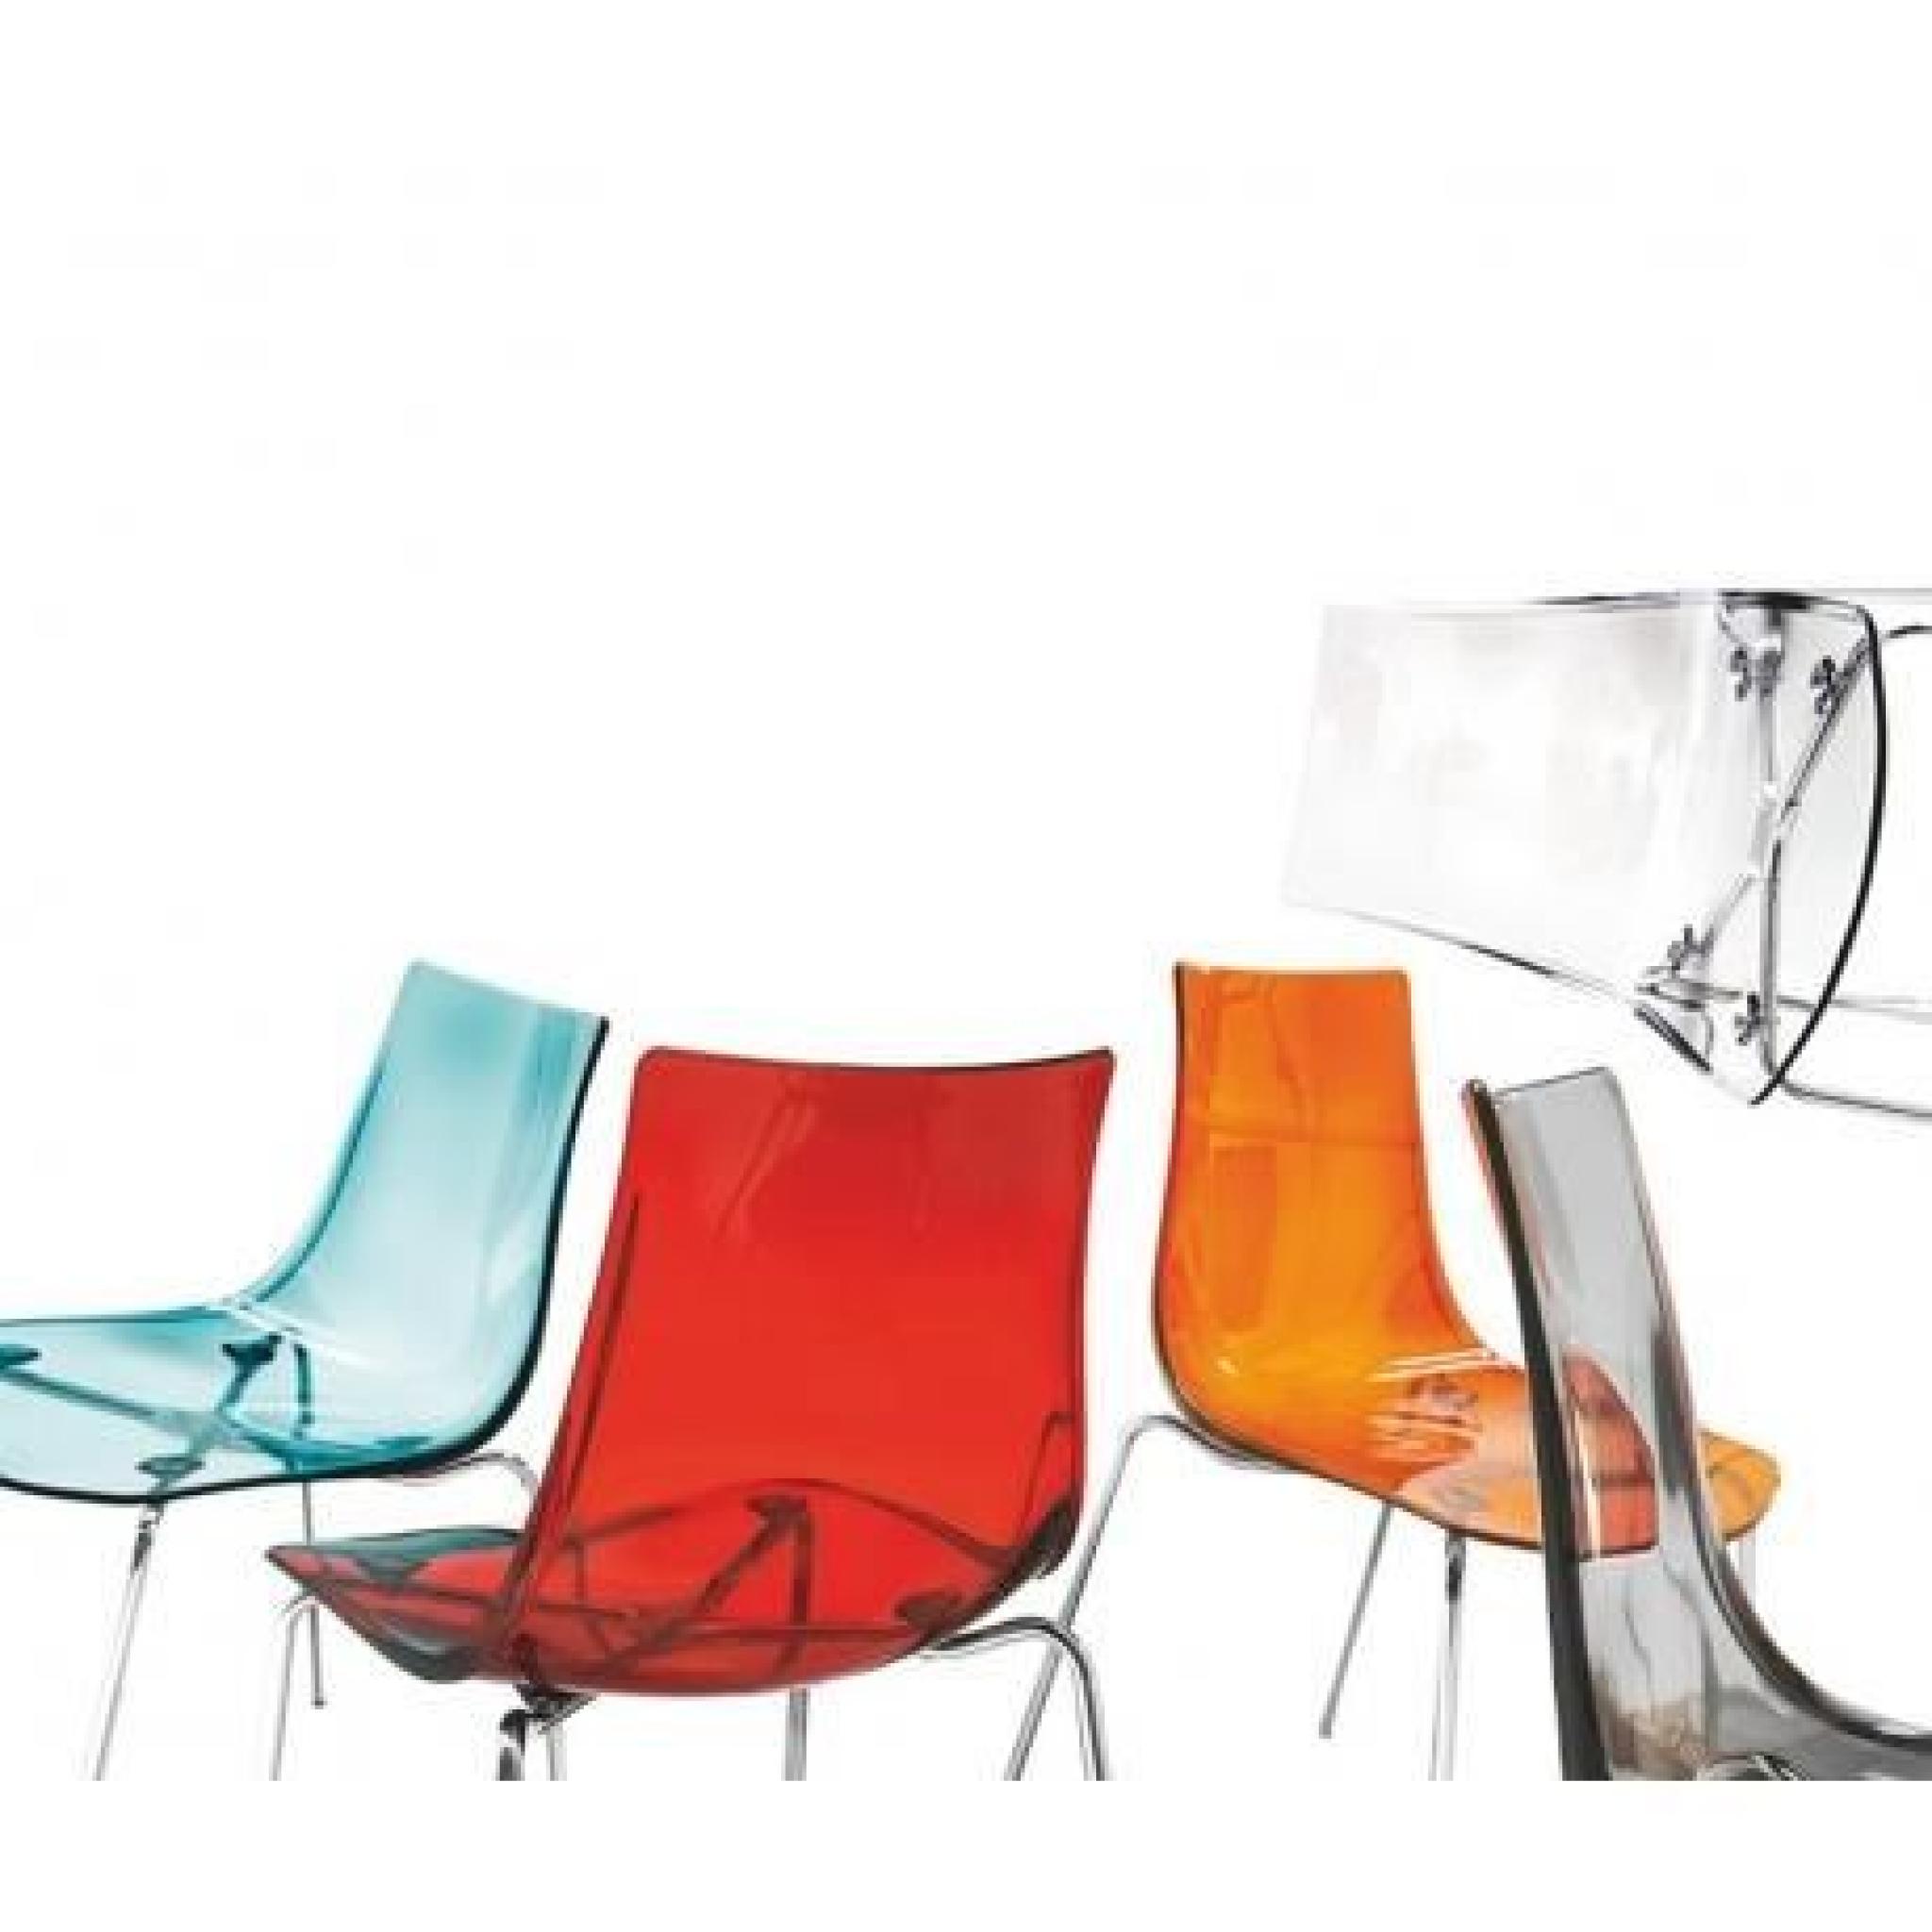 ORBITE - Chaise en acrylique orange